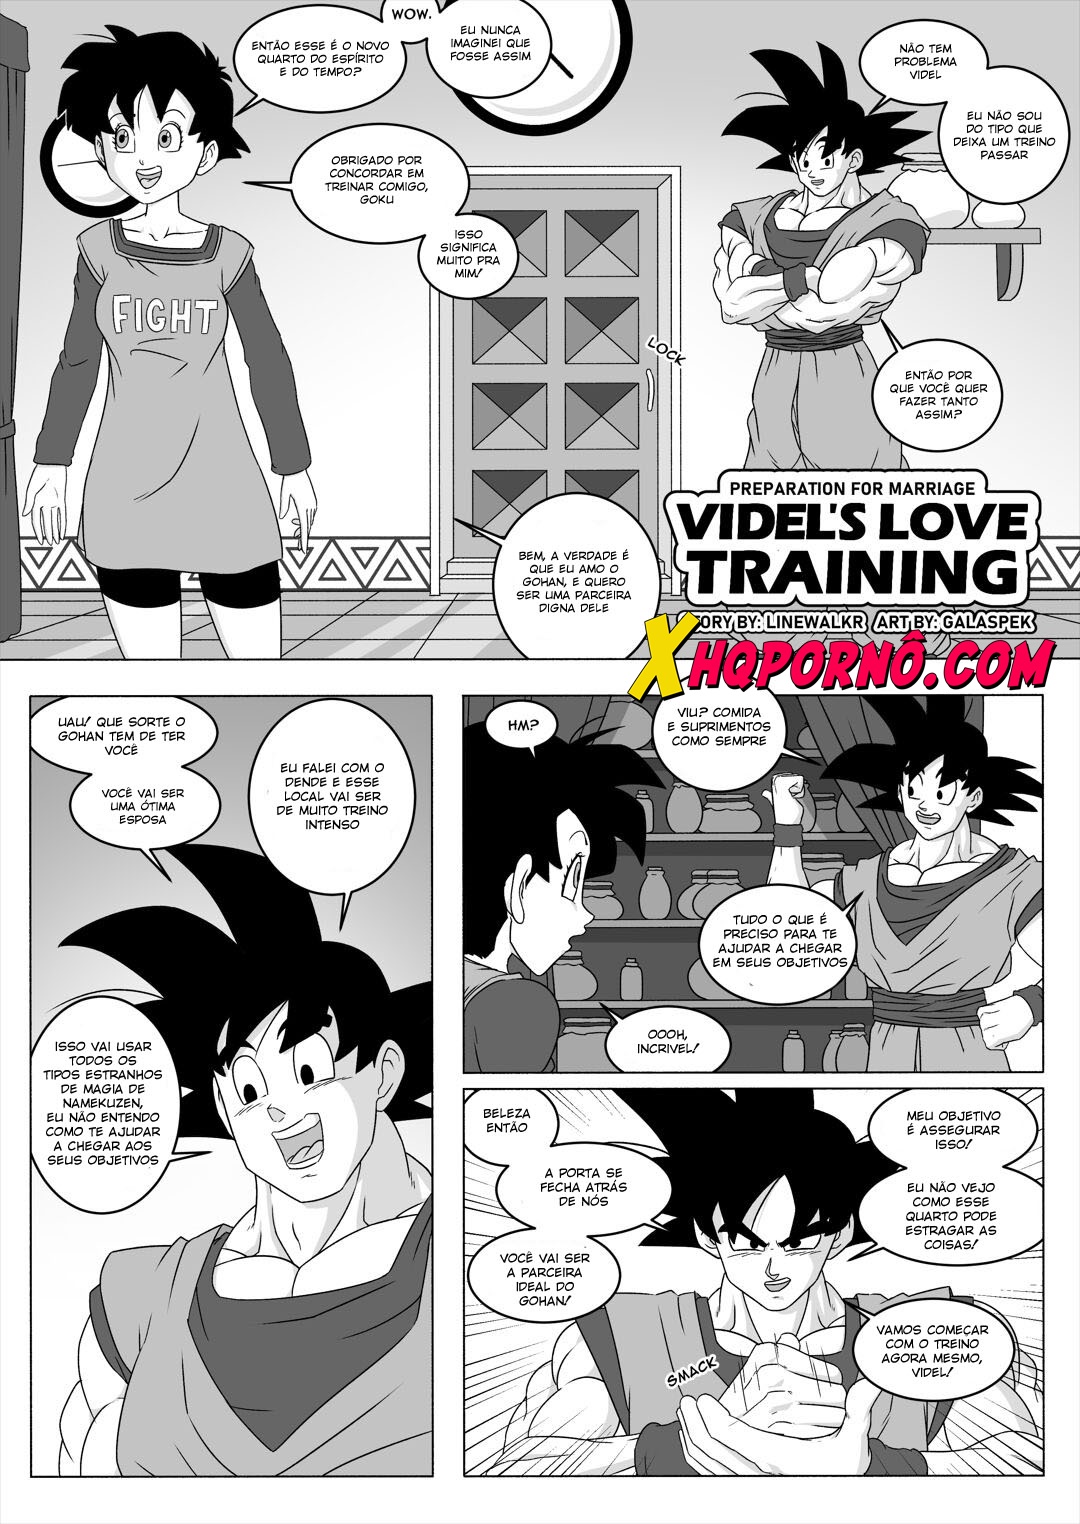 Videl’s love training